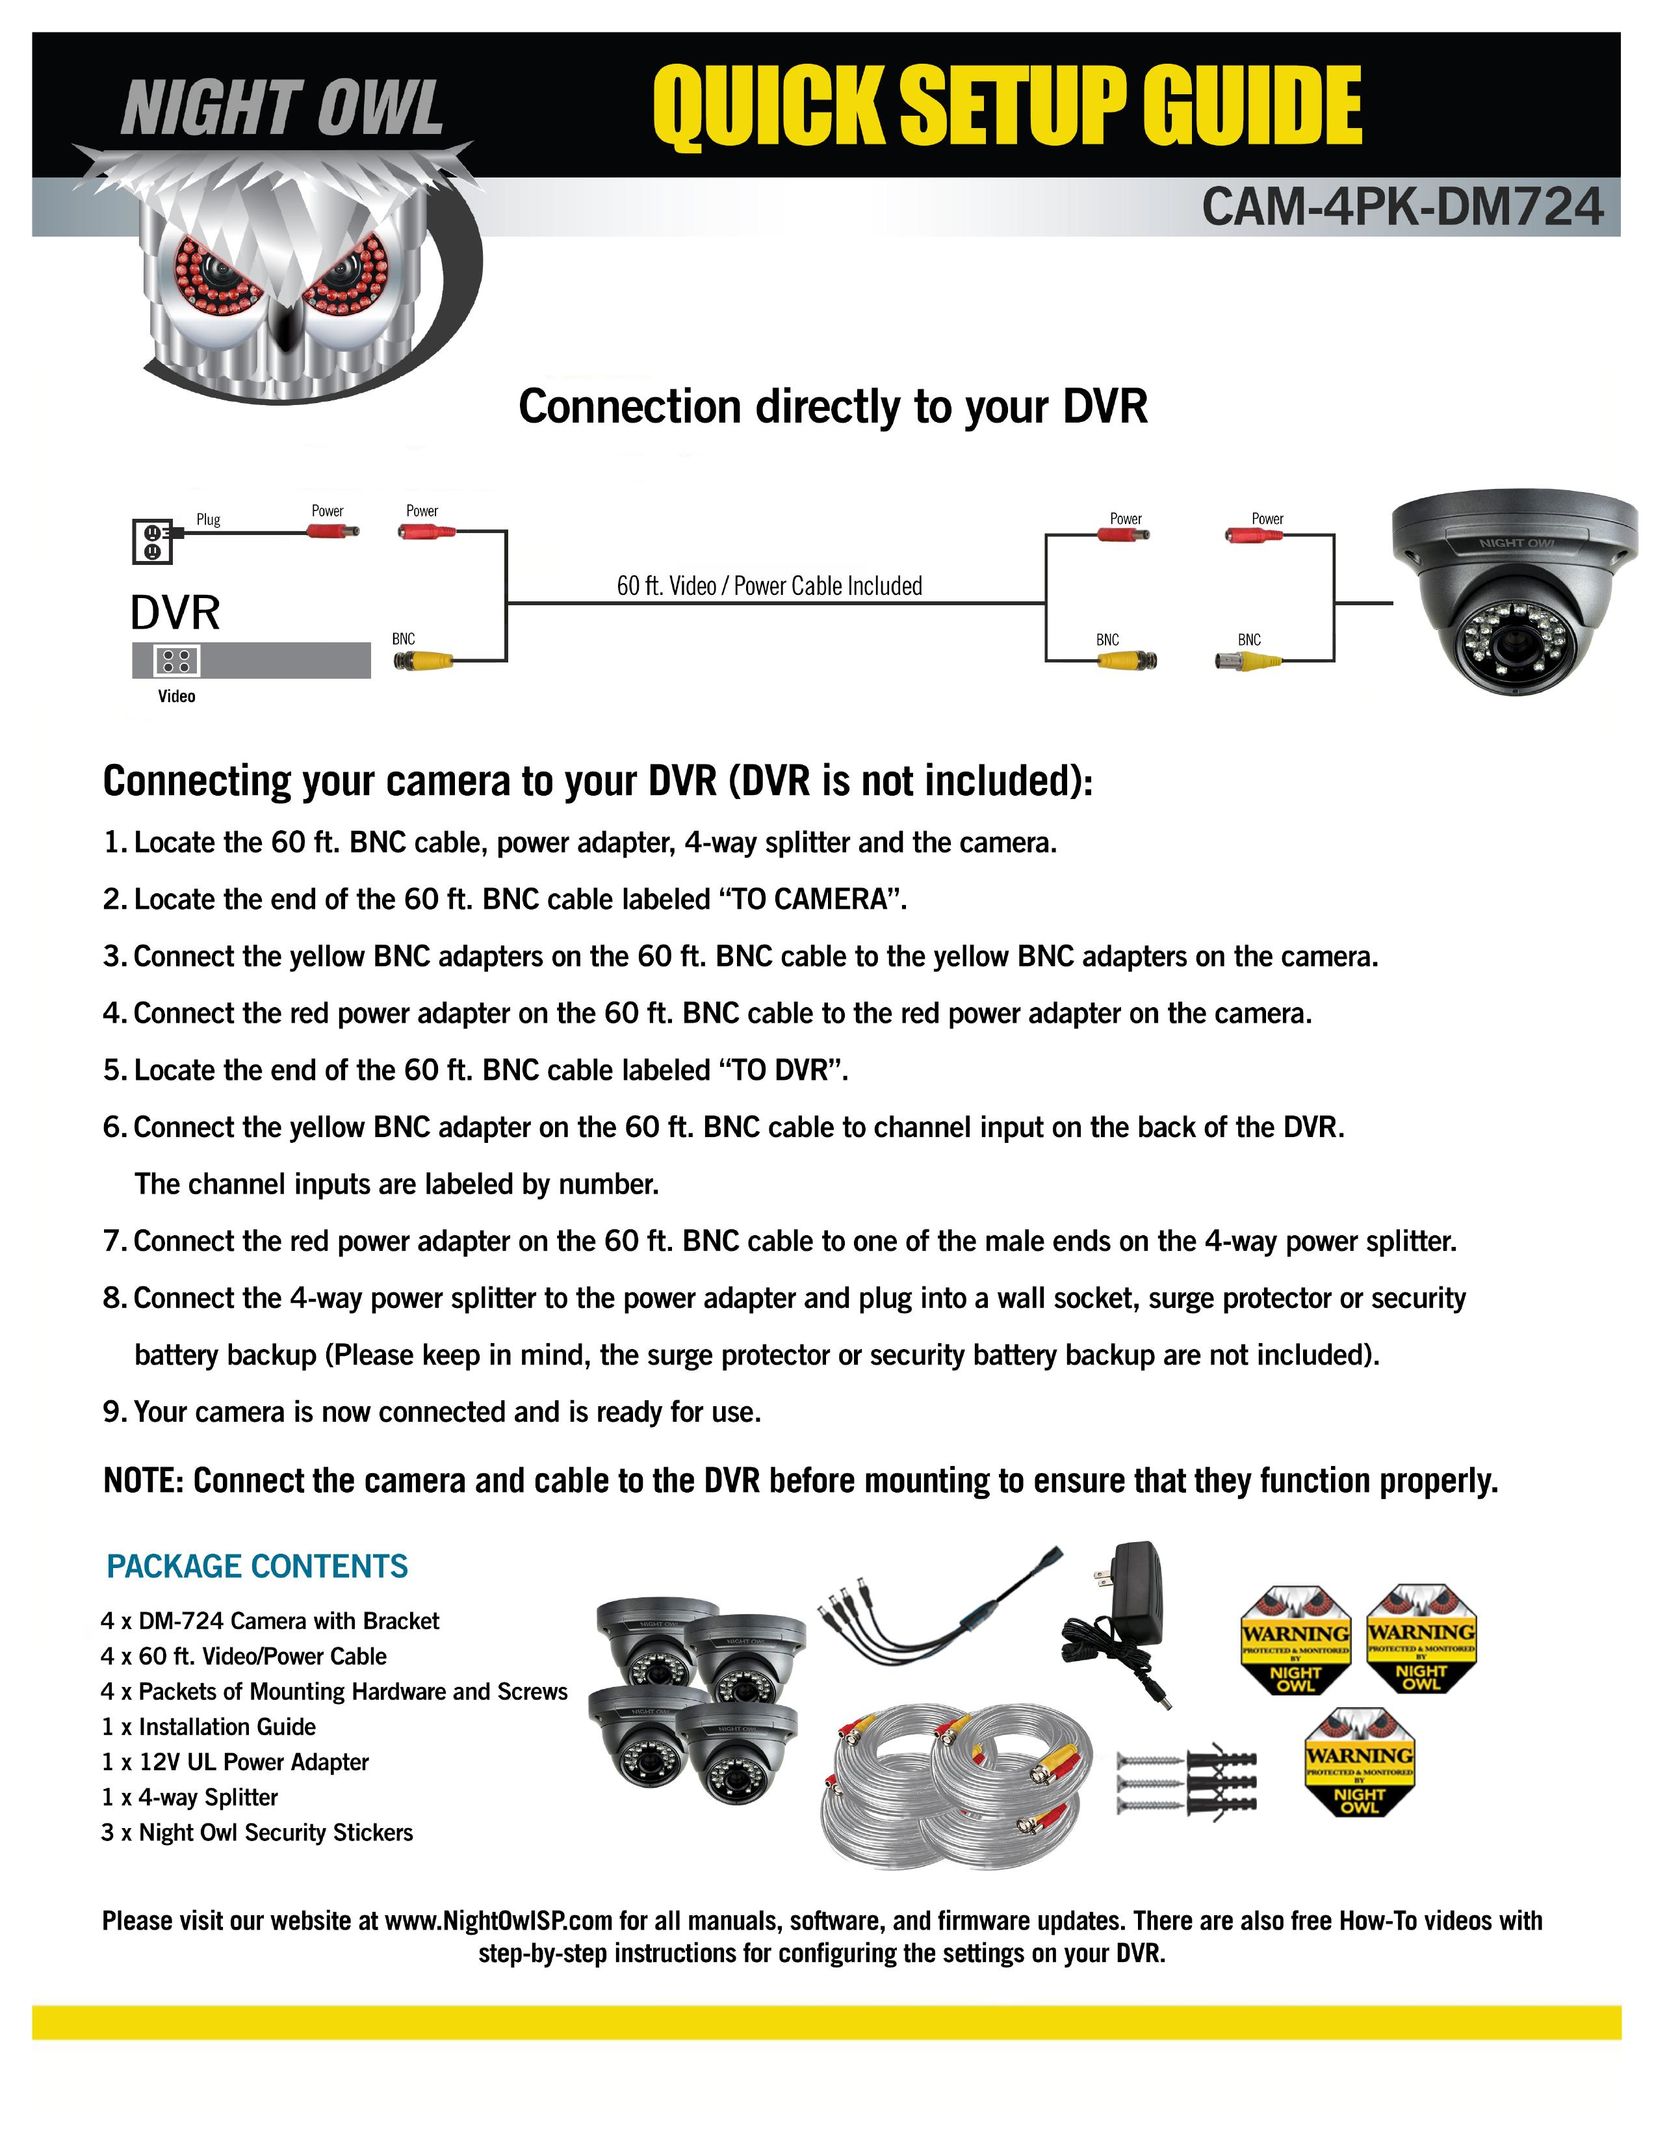 Night Owl Optics CAM-4PK-DM724 Home Security System User Manual